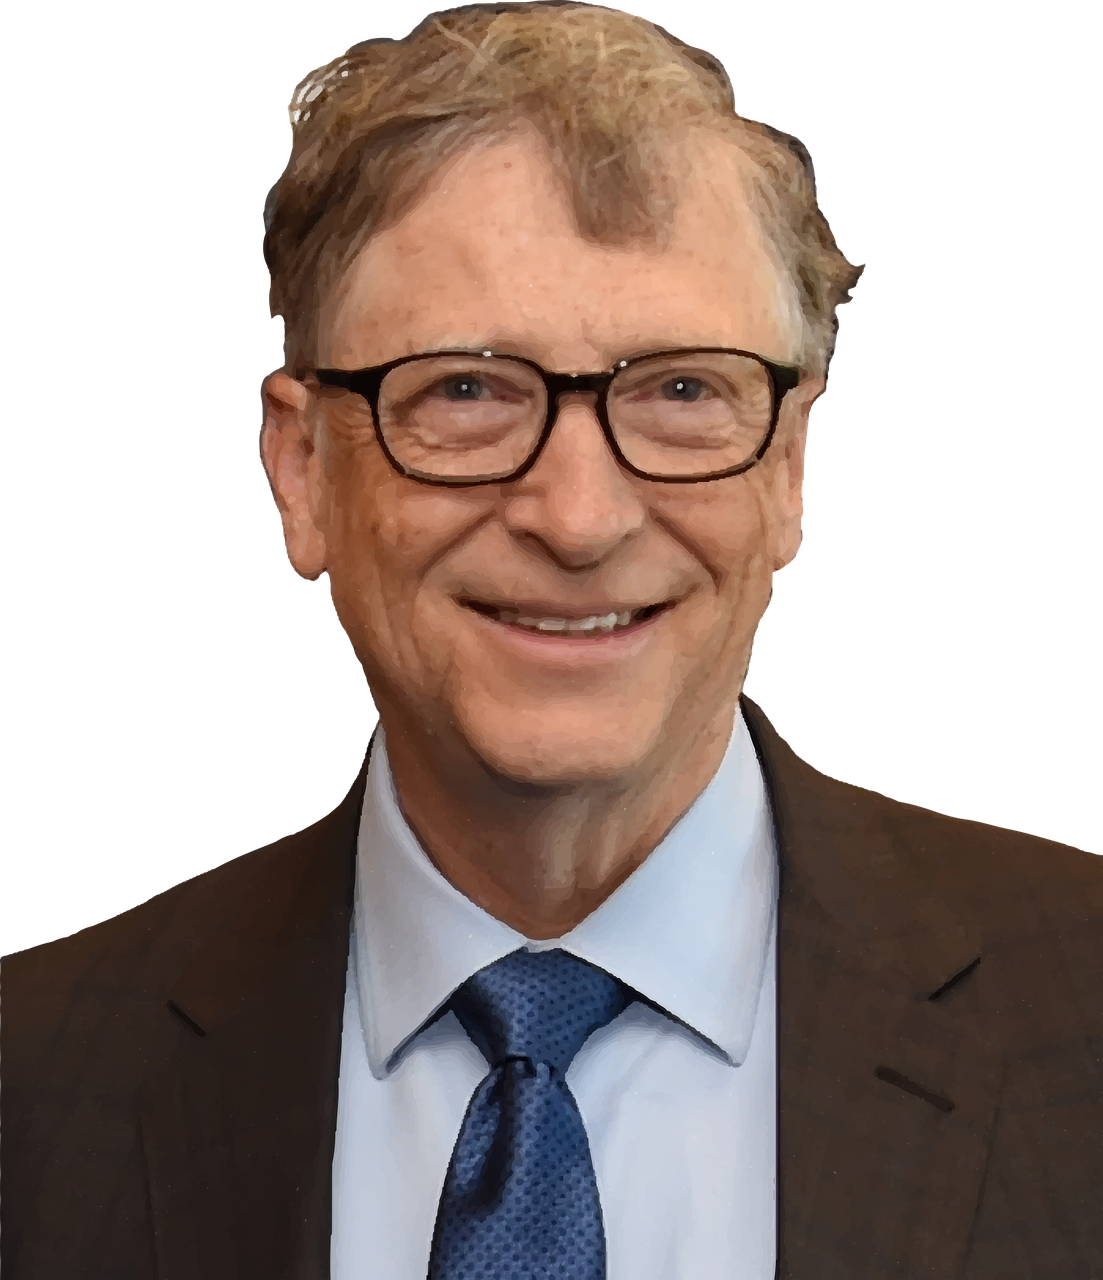 Bill Gates PNG Image File